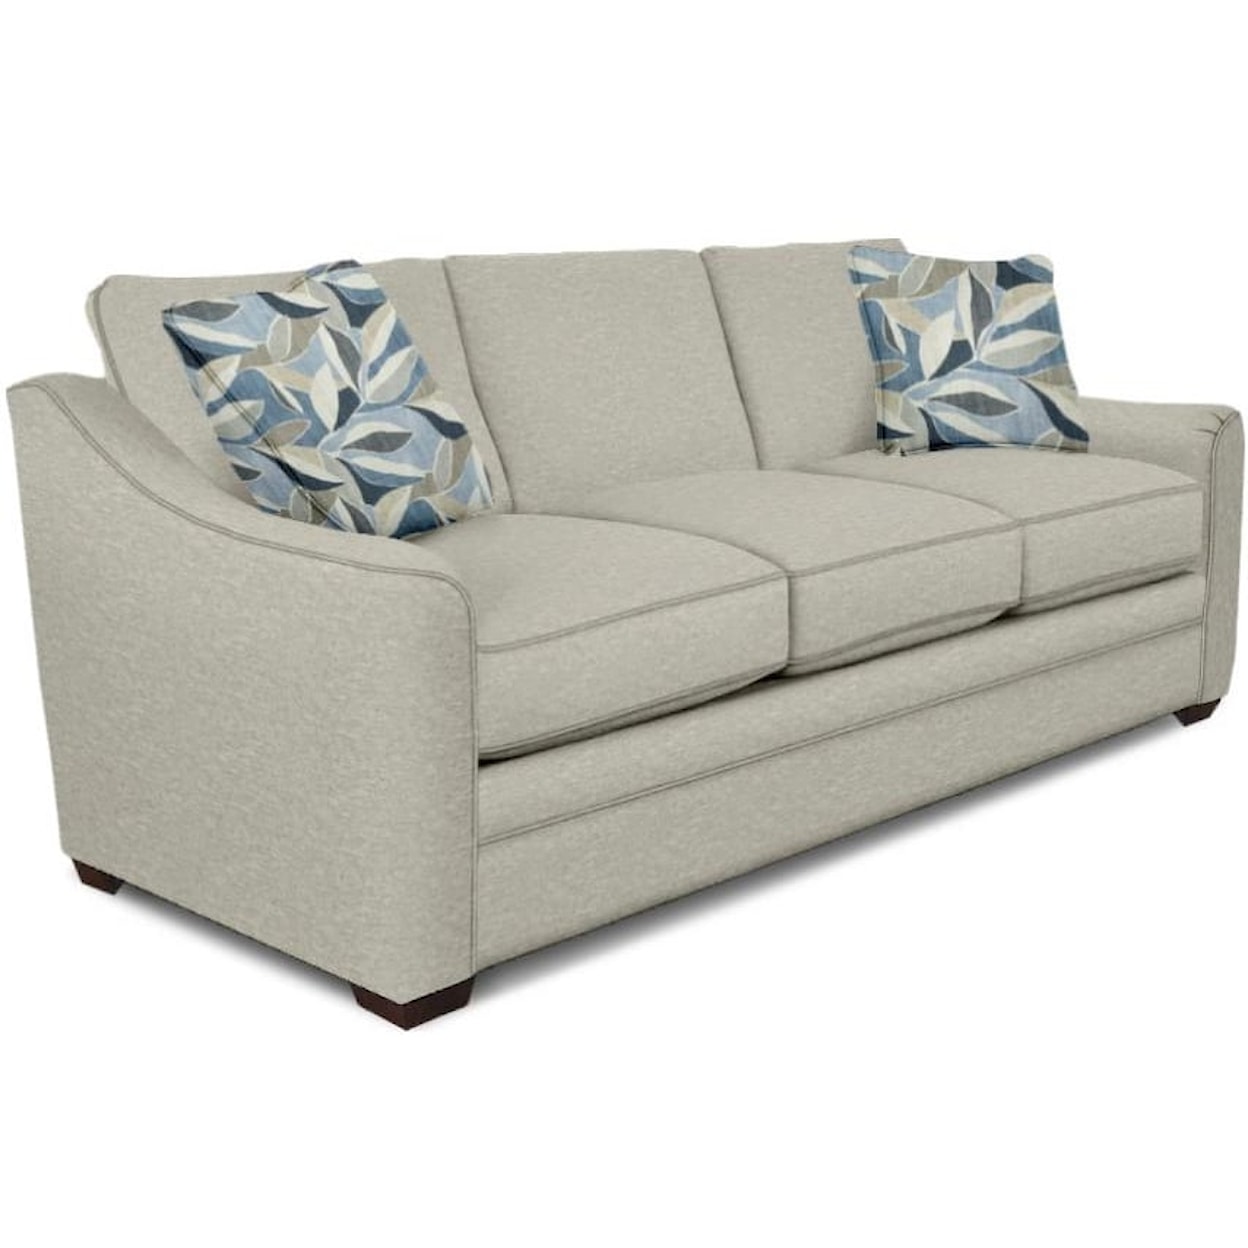 Craftmaster F9 Design Options Customizable Sofa